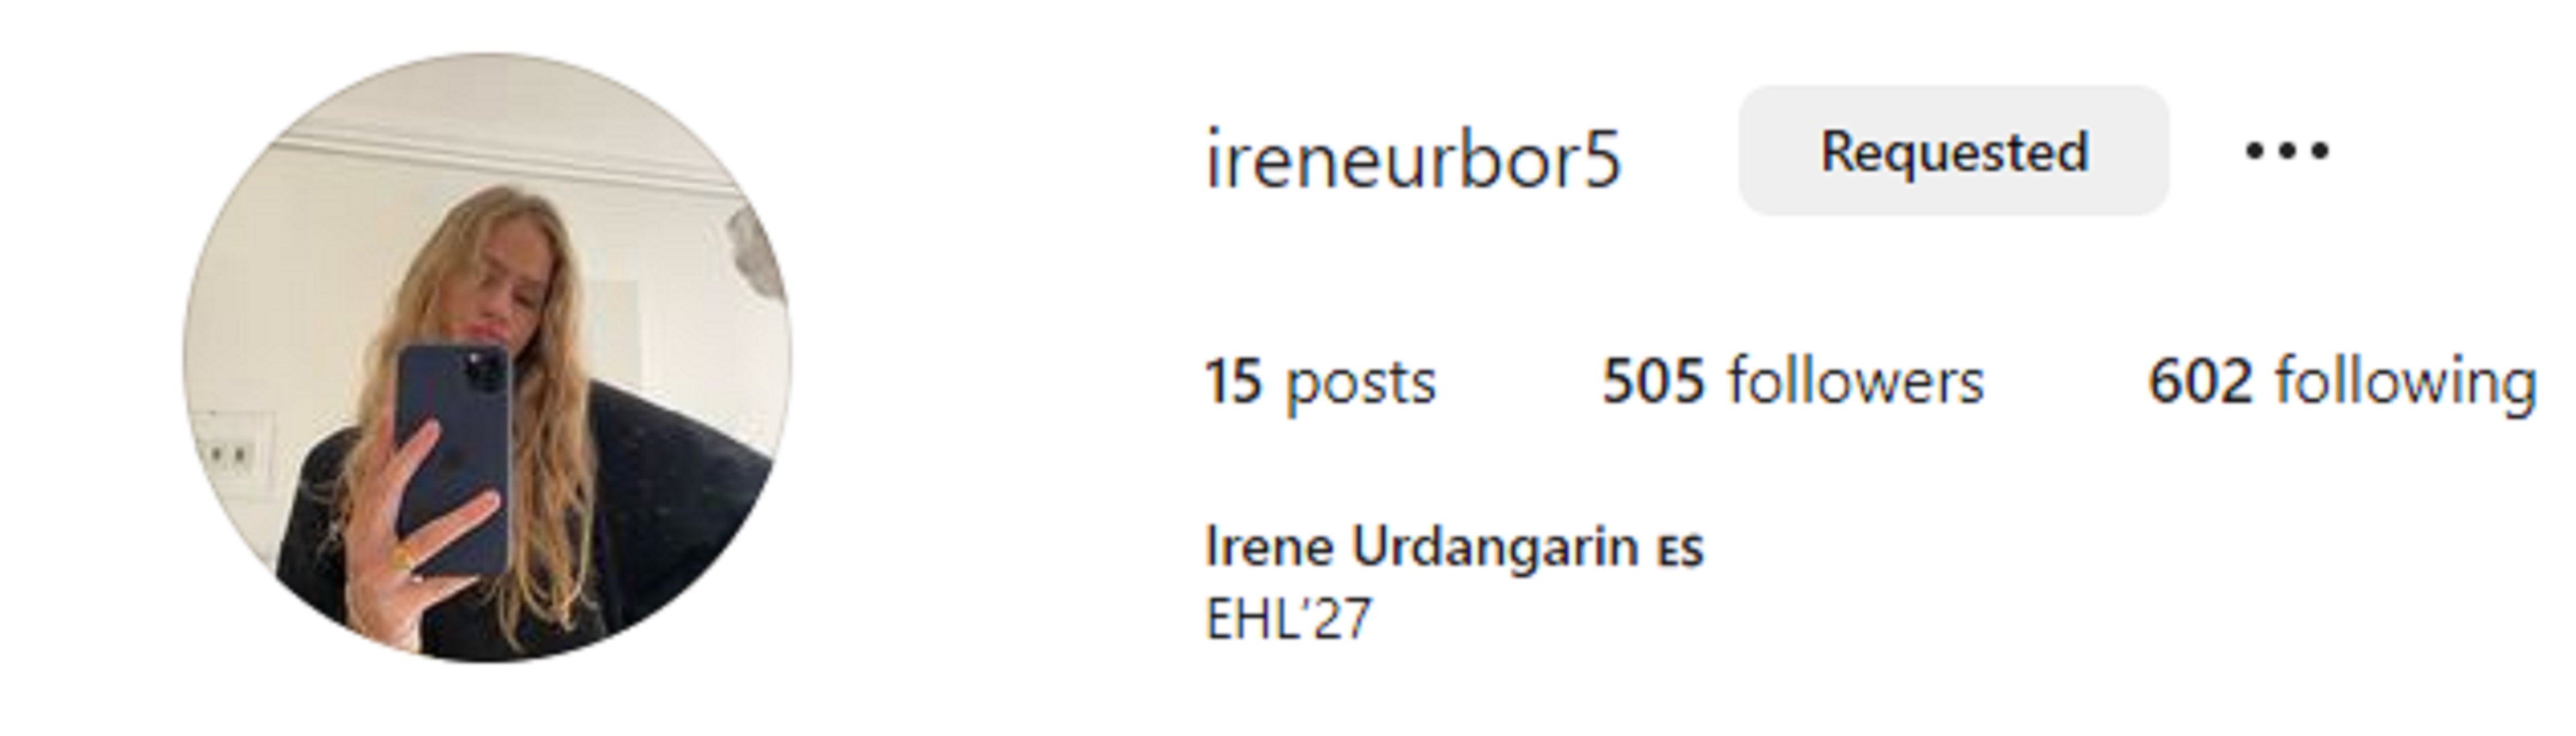 Perfil Instagram Irene Urdangarin